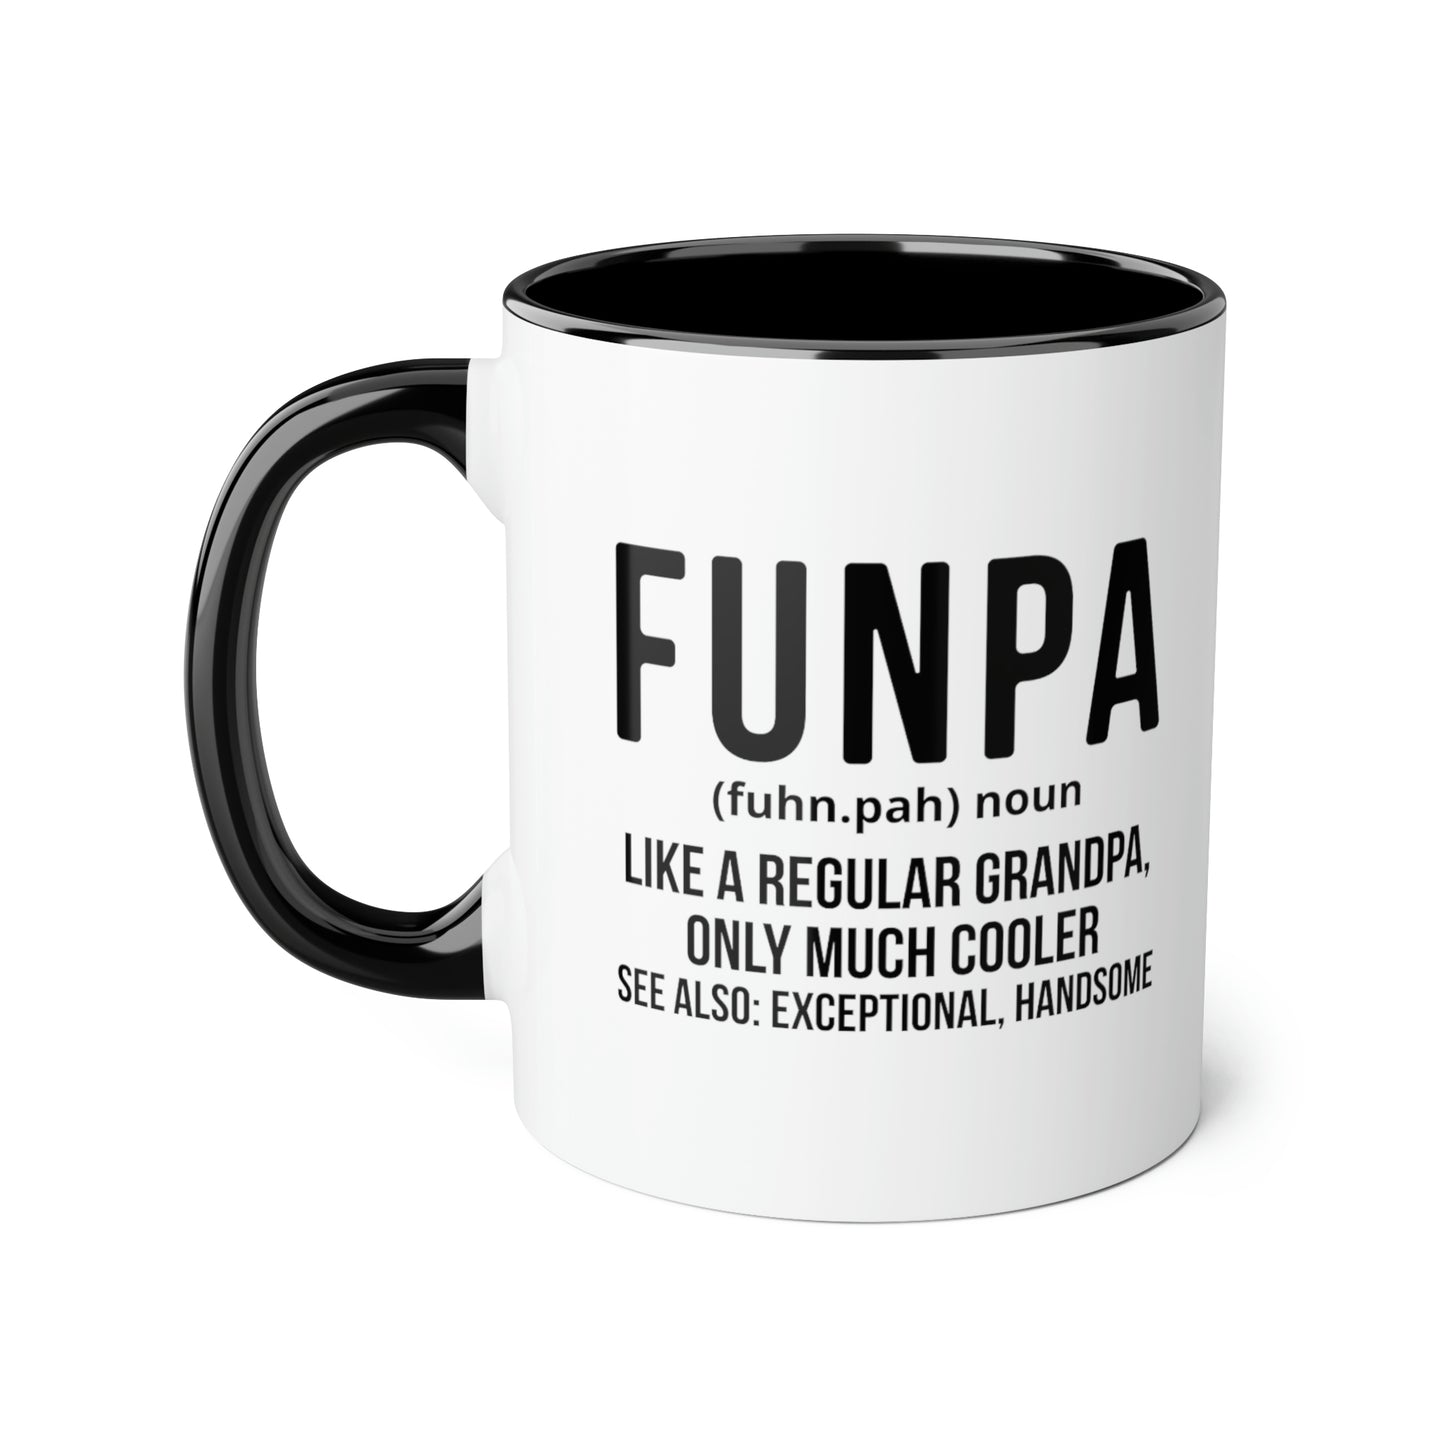 Funpa Accent Mugs, 11oz